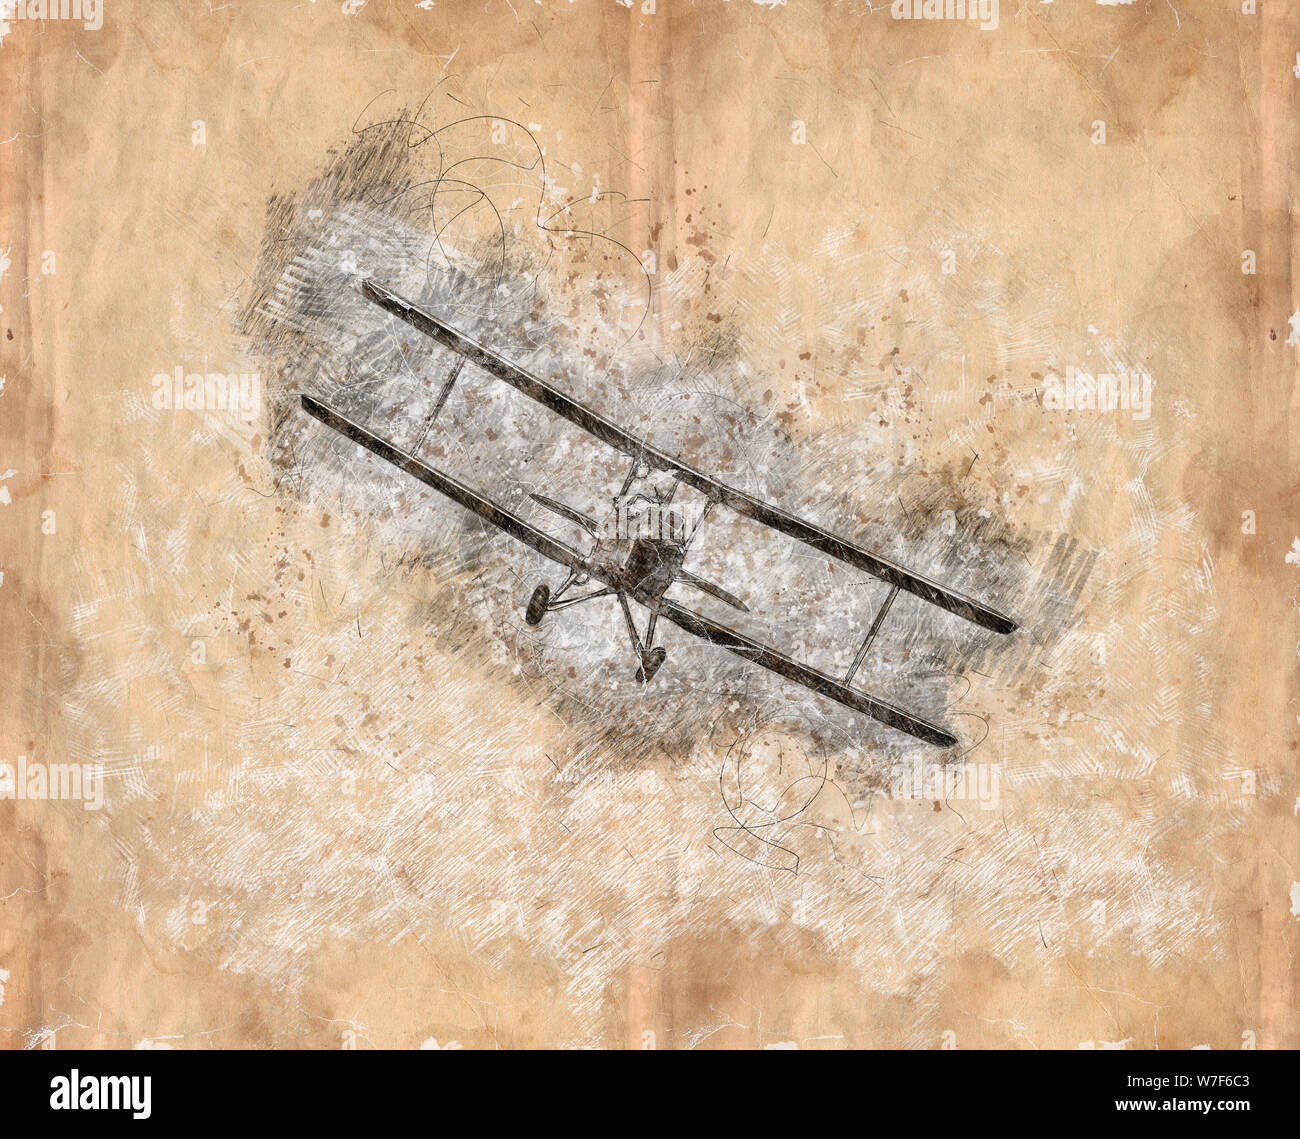 Digitally enhanced image of a biplane in flight Stock Photo